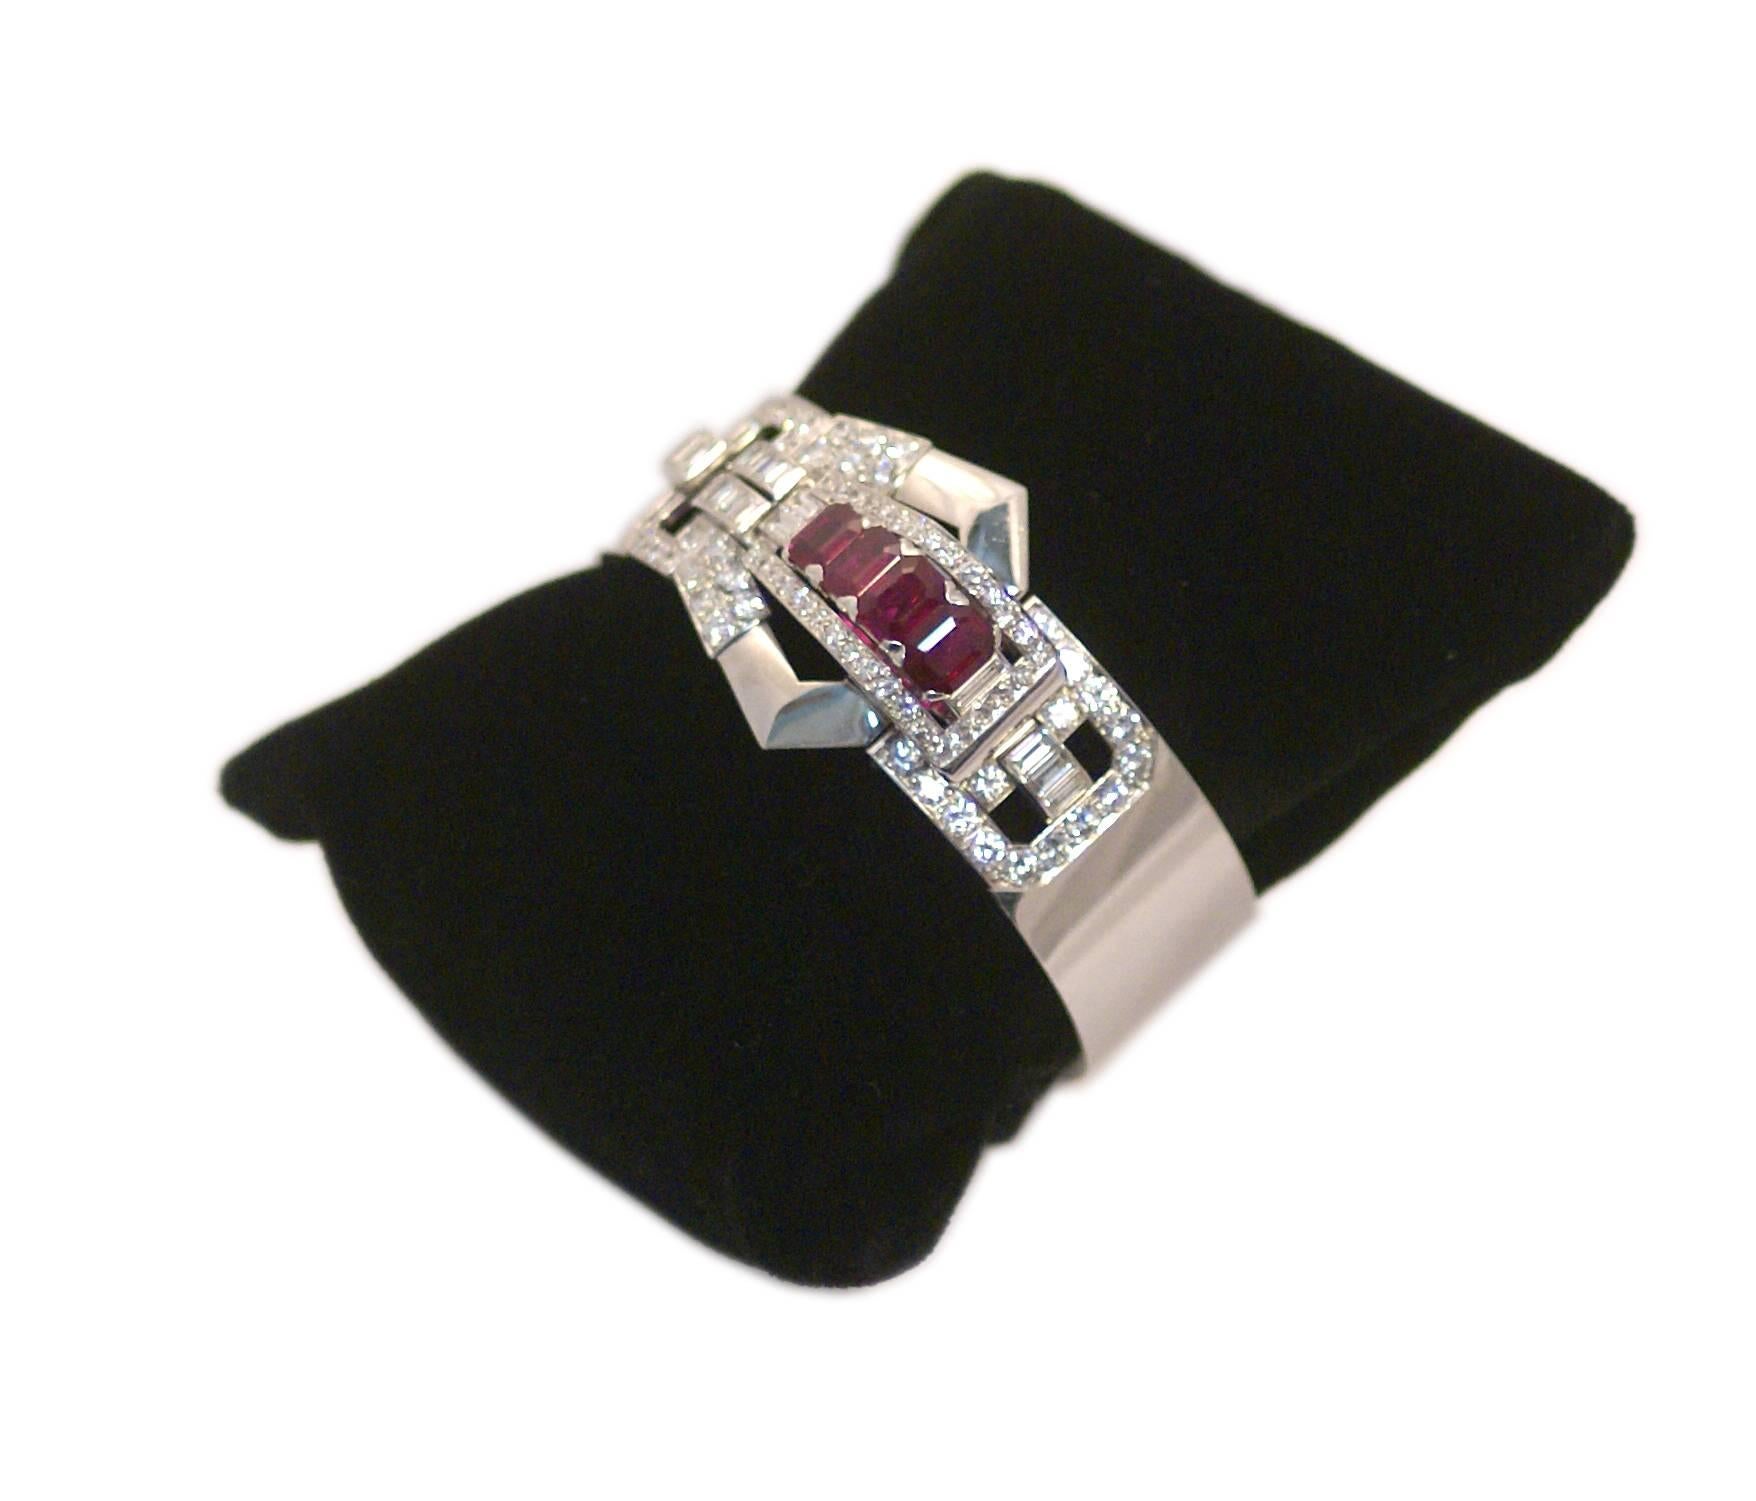 A platinum cuff bracelet of geometrical design, enhanced with natural Burmese rubies and mixed cut diamonds. Crica 1950.